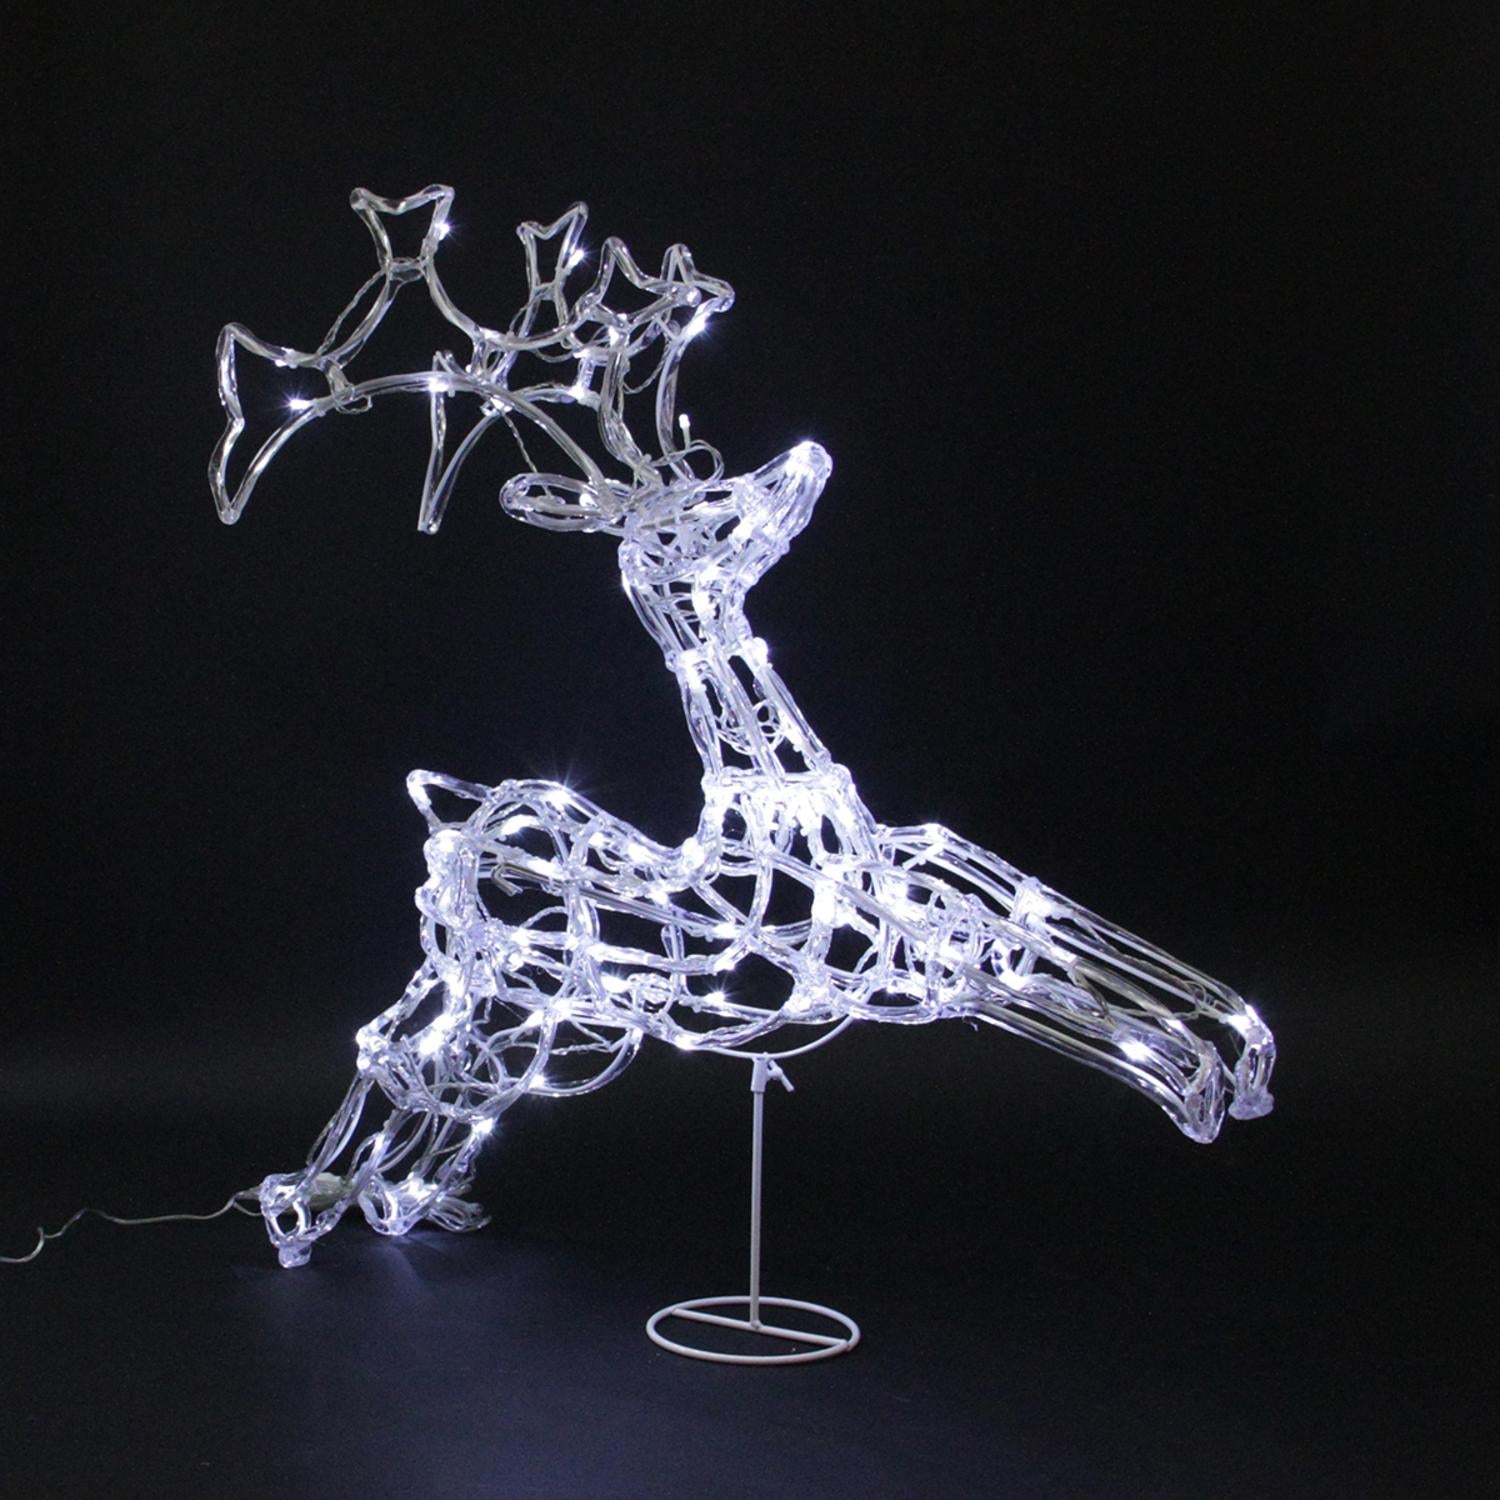 33" LED Lighted Running Buck Deer Spun Glass Christmas Outdoor Decoration - Polar White Lights